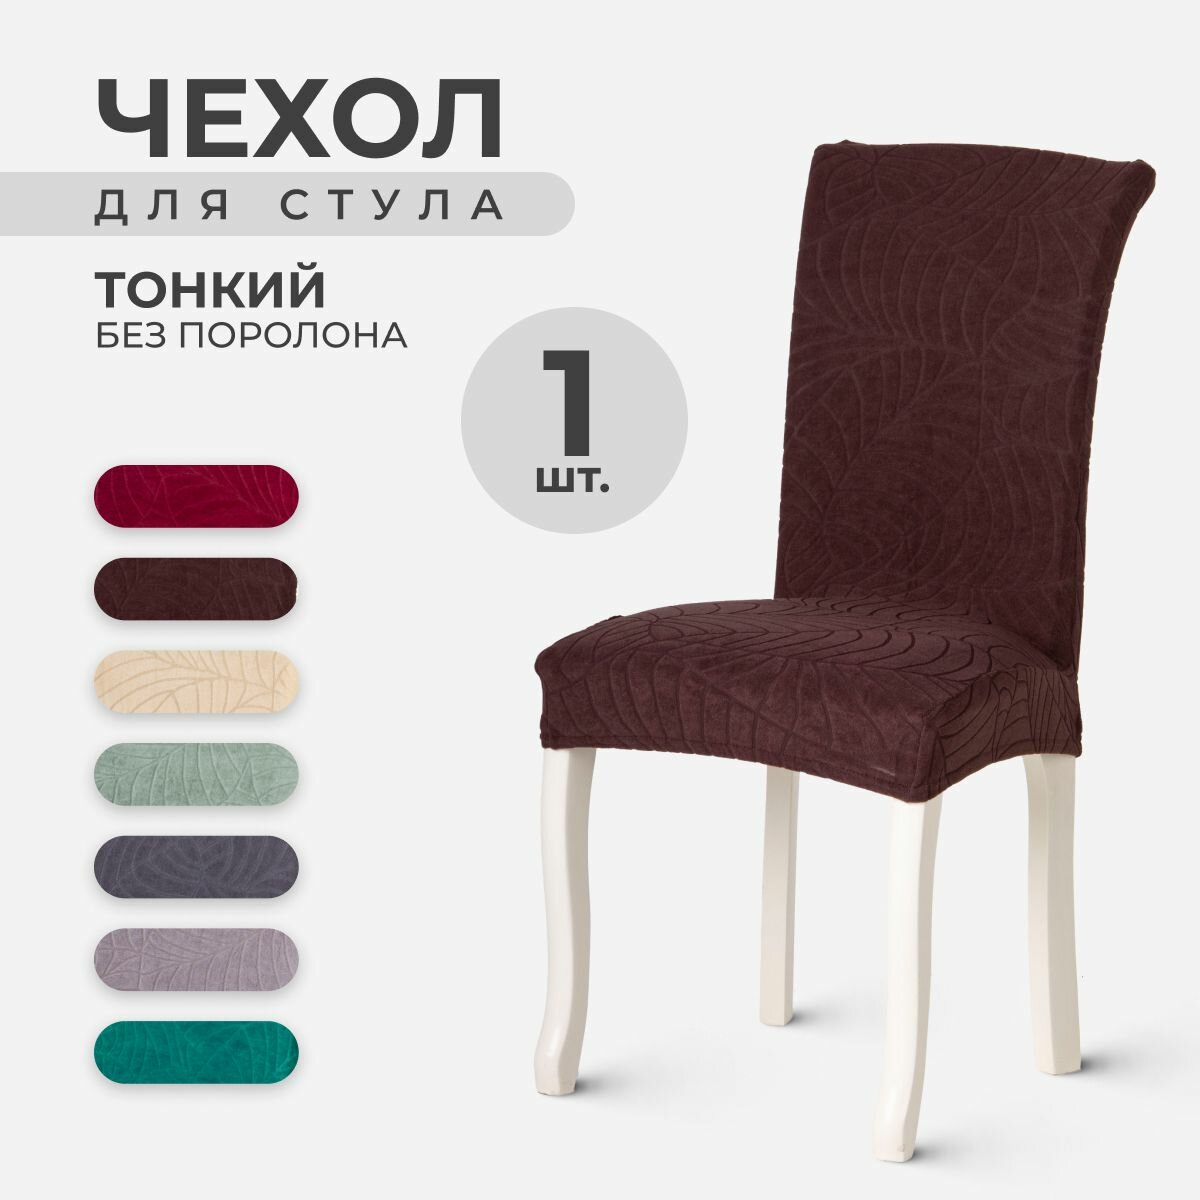 Чехол LuxAlto на стул со спинкой, ткань Leaves, Темно-коричневый, 1 штука